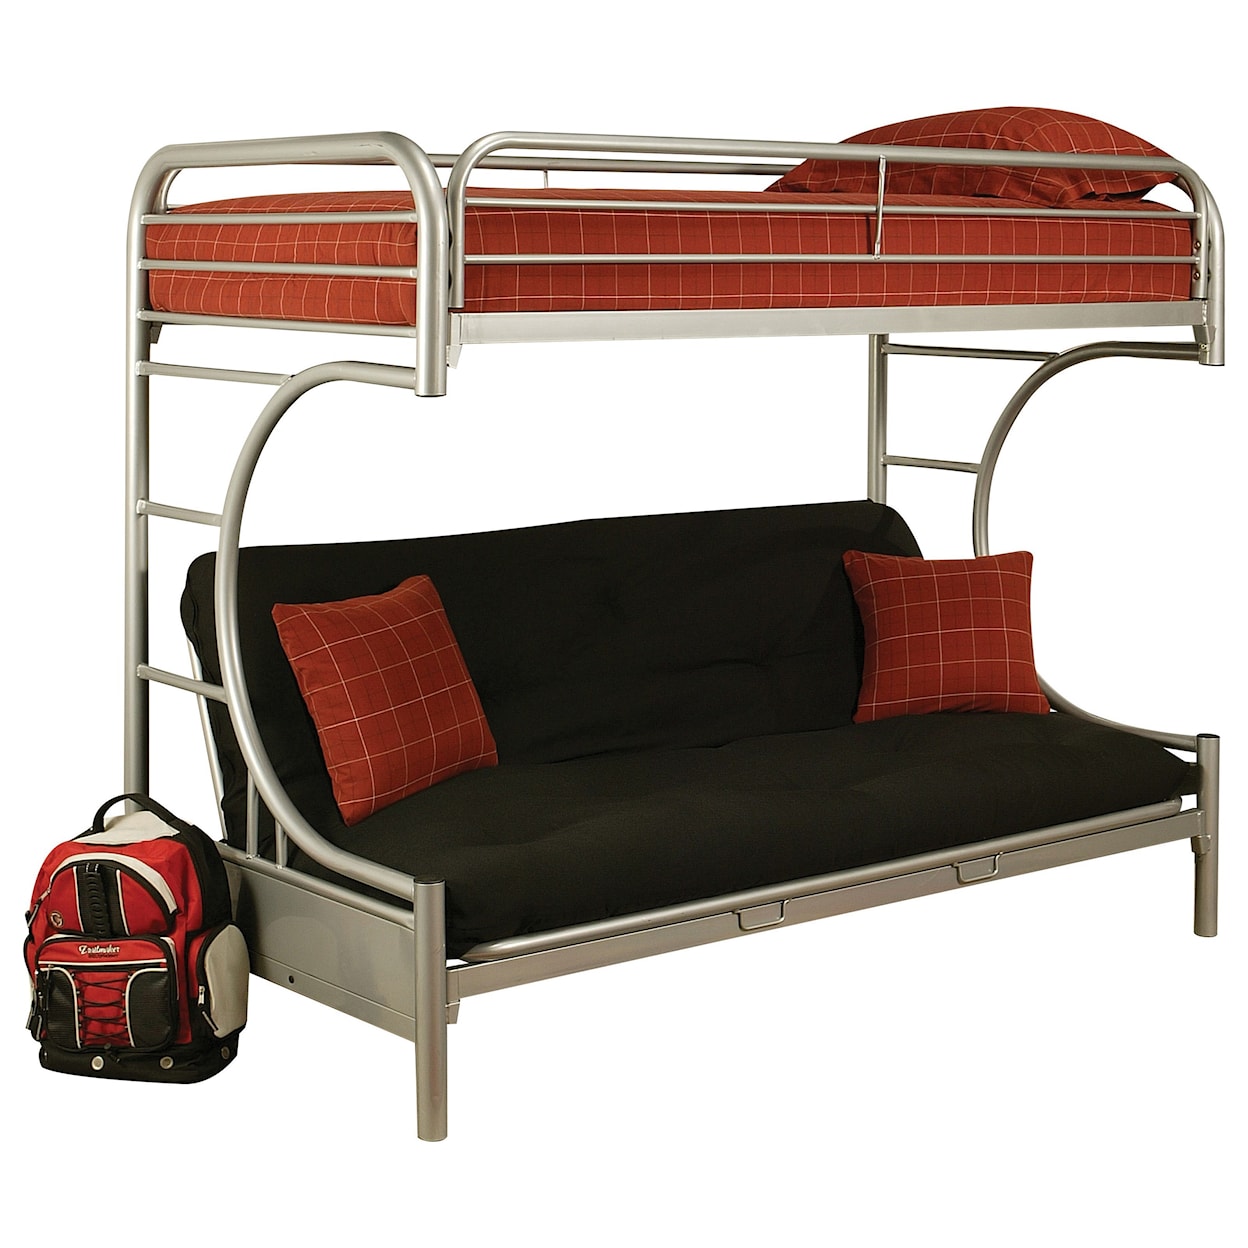 Acme Furniture Eclipse Twin XL/Queen Futon Bunk Bed